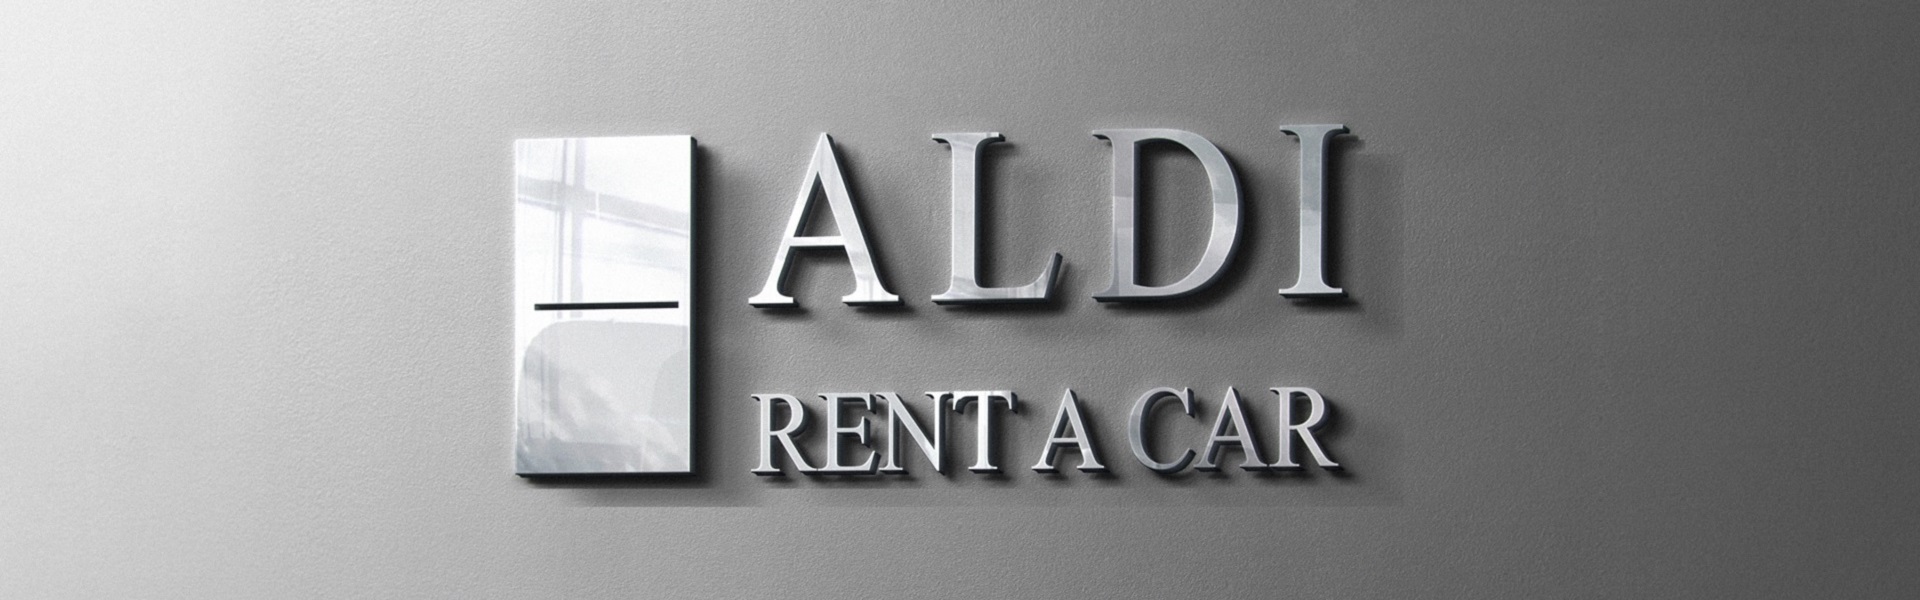 Rent a car Beograd ALDI | Hyundai Srbija AC Brajic